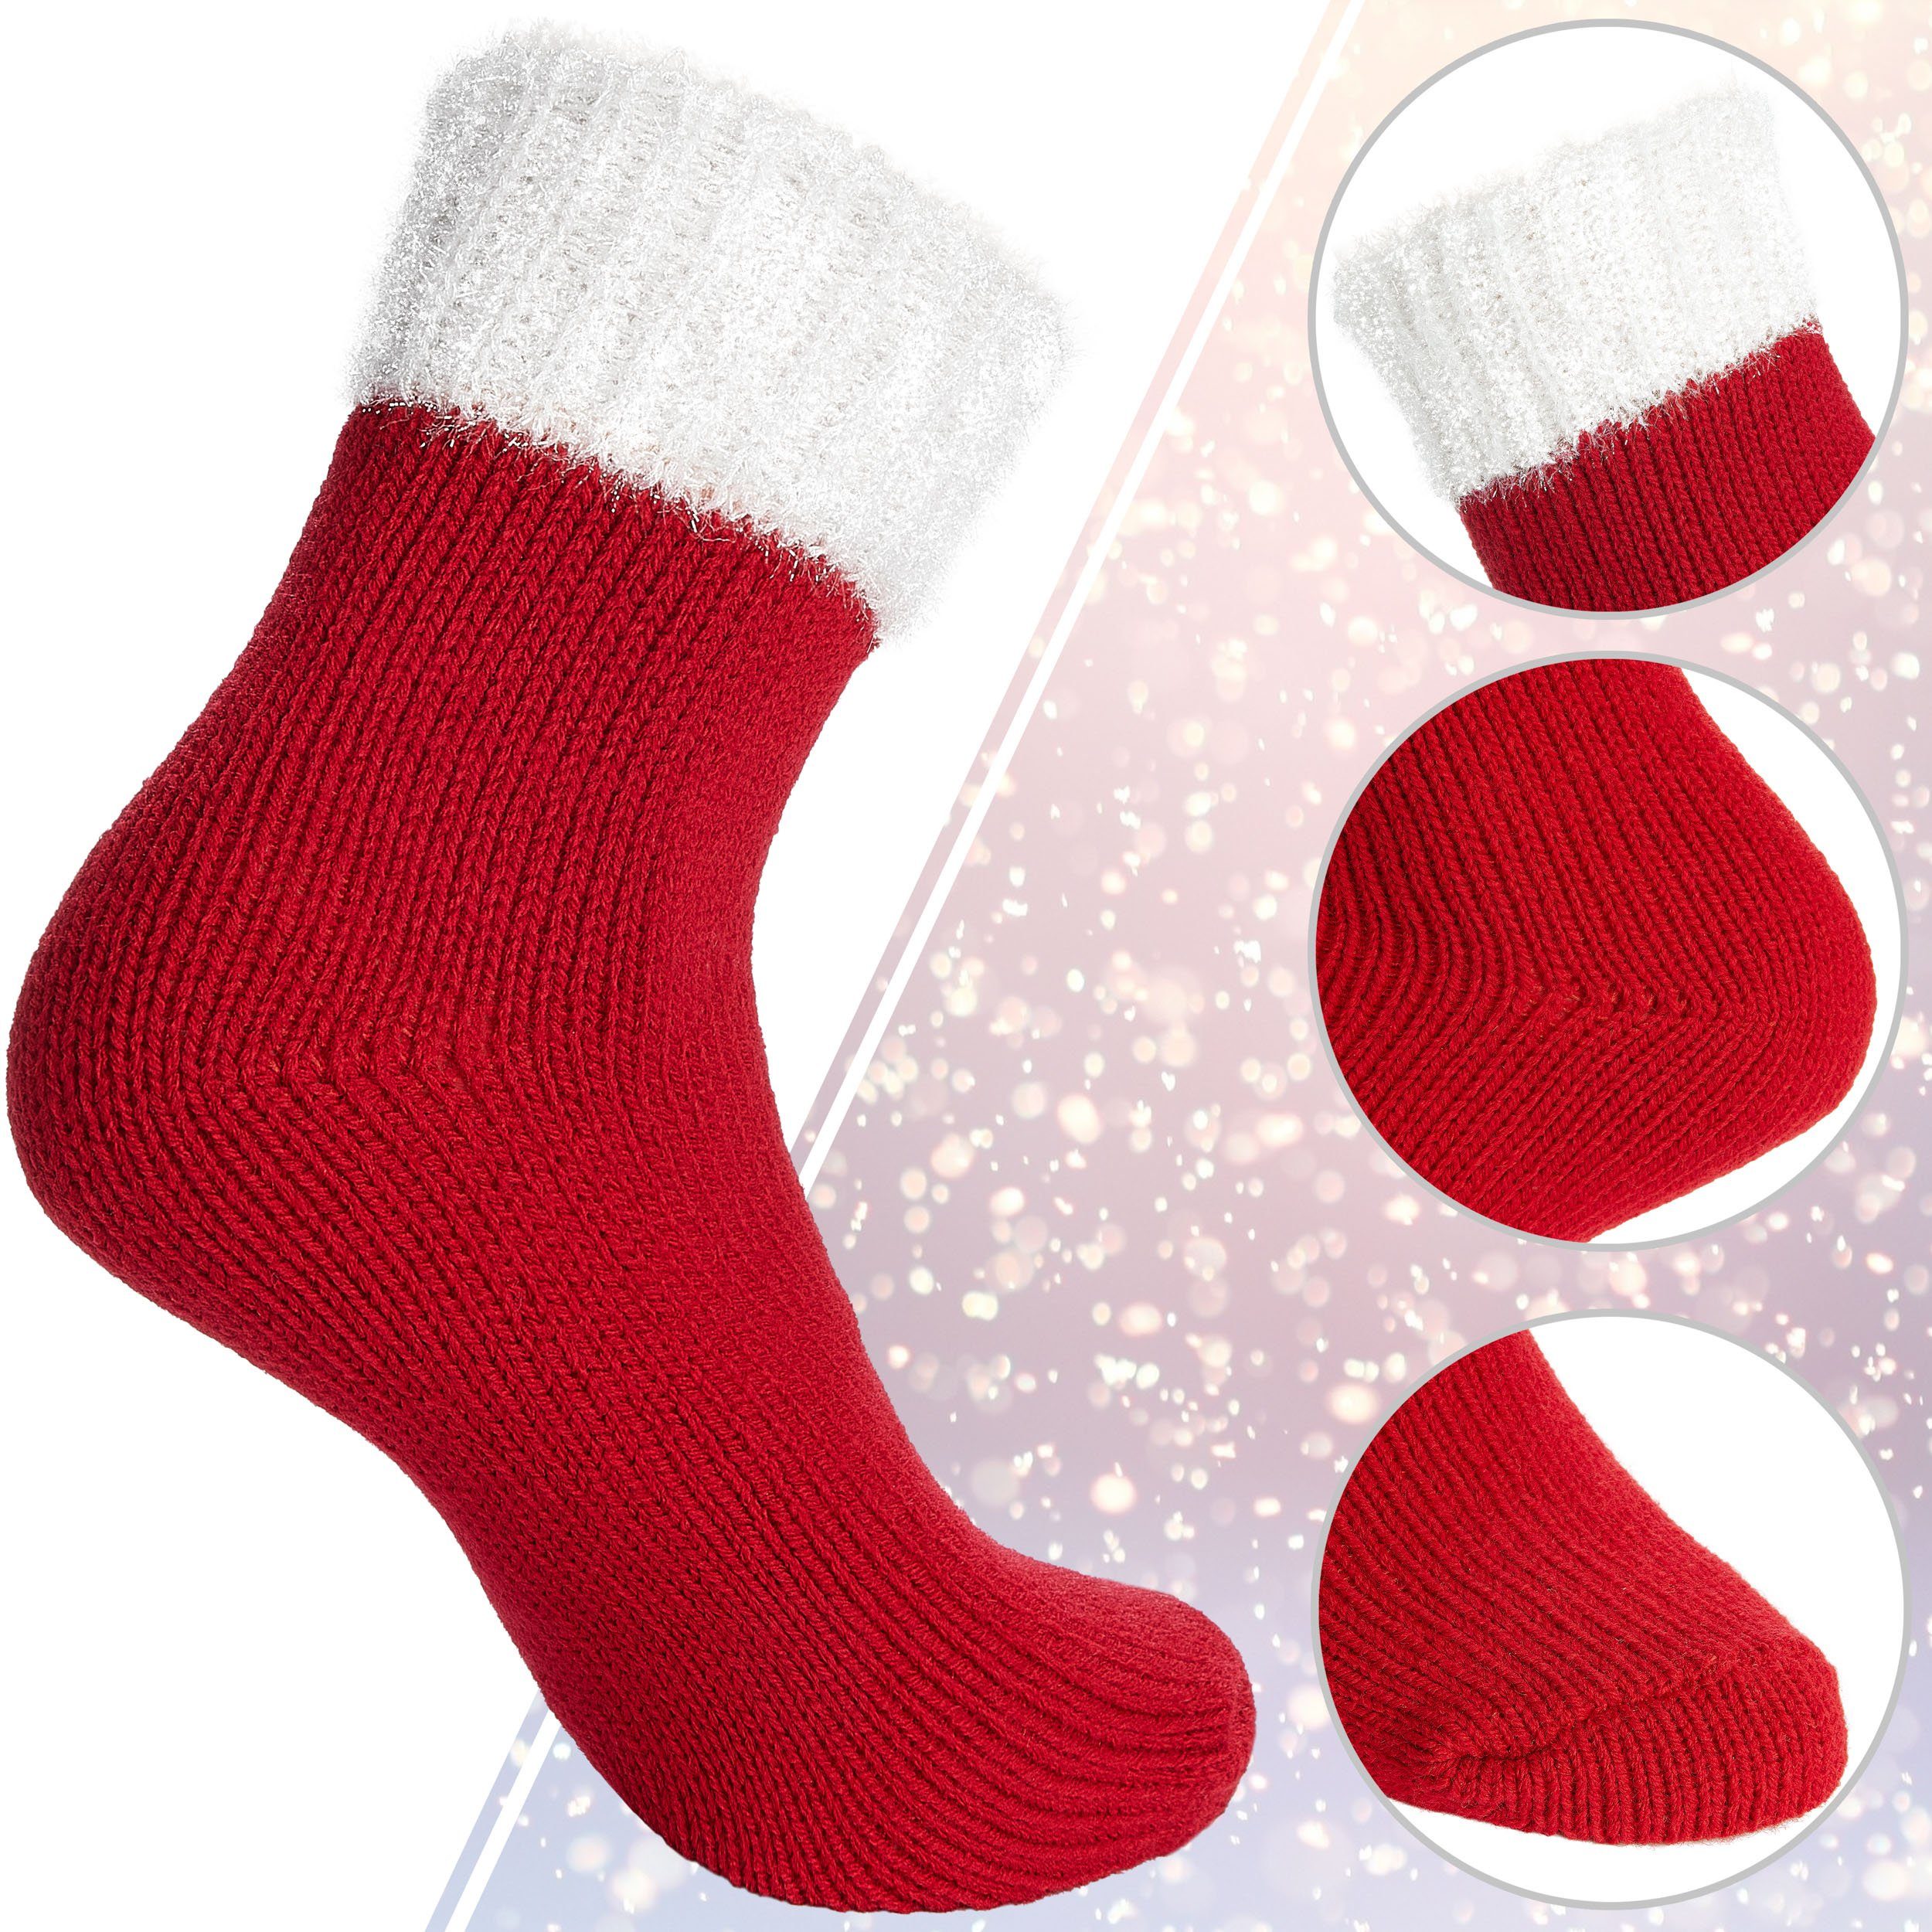 Kuschelsocken Wintersocken Socken BRUBAKER (2-Paar, Weihnachten) flauschige Pack Bund Damensocken Glitzer - mit - Bettsocken Frauen Rot 2er Bequem Damen Warme - Weihnachtssocken Socken